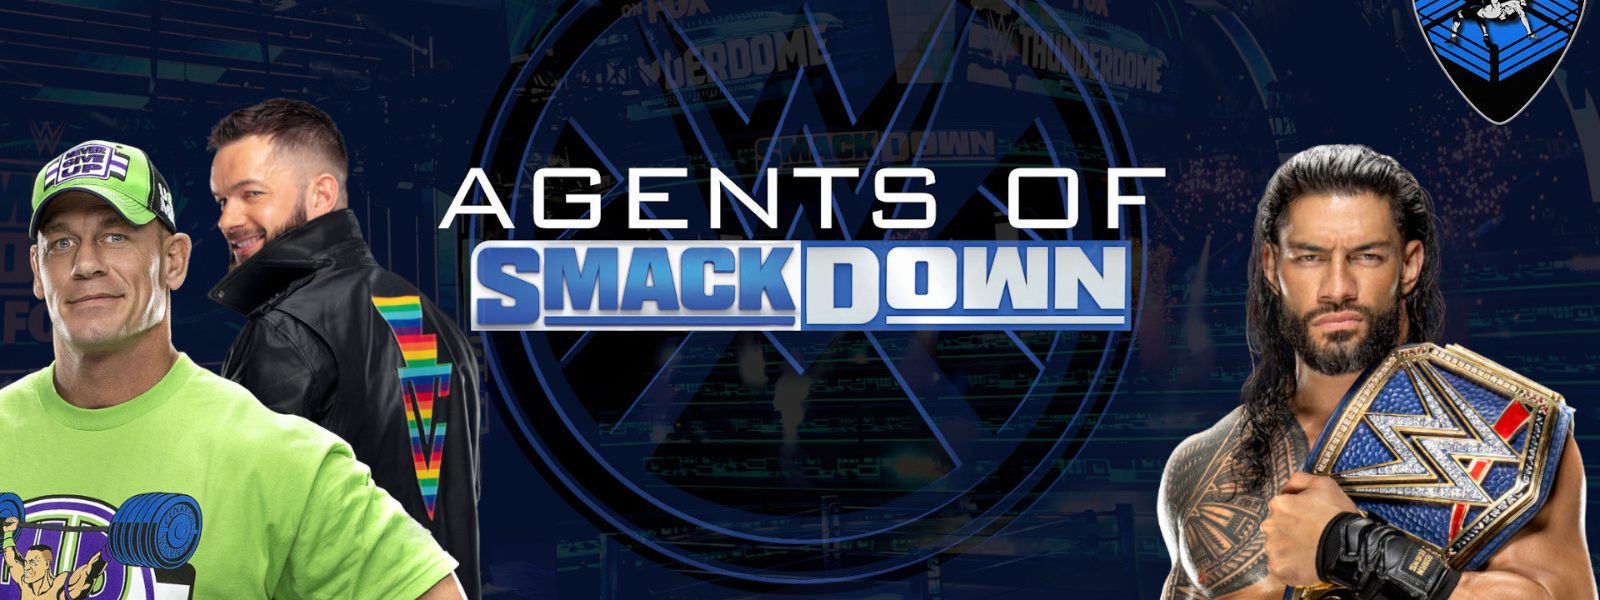 Cambia tutto in vista di SummerSlam?! - Agents Of Smackdown EP.16